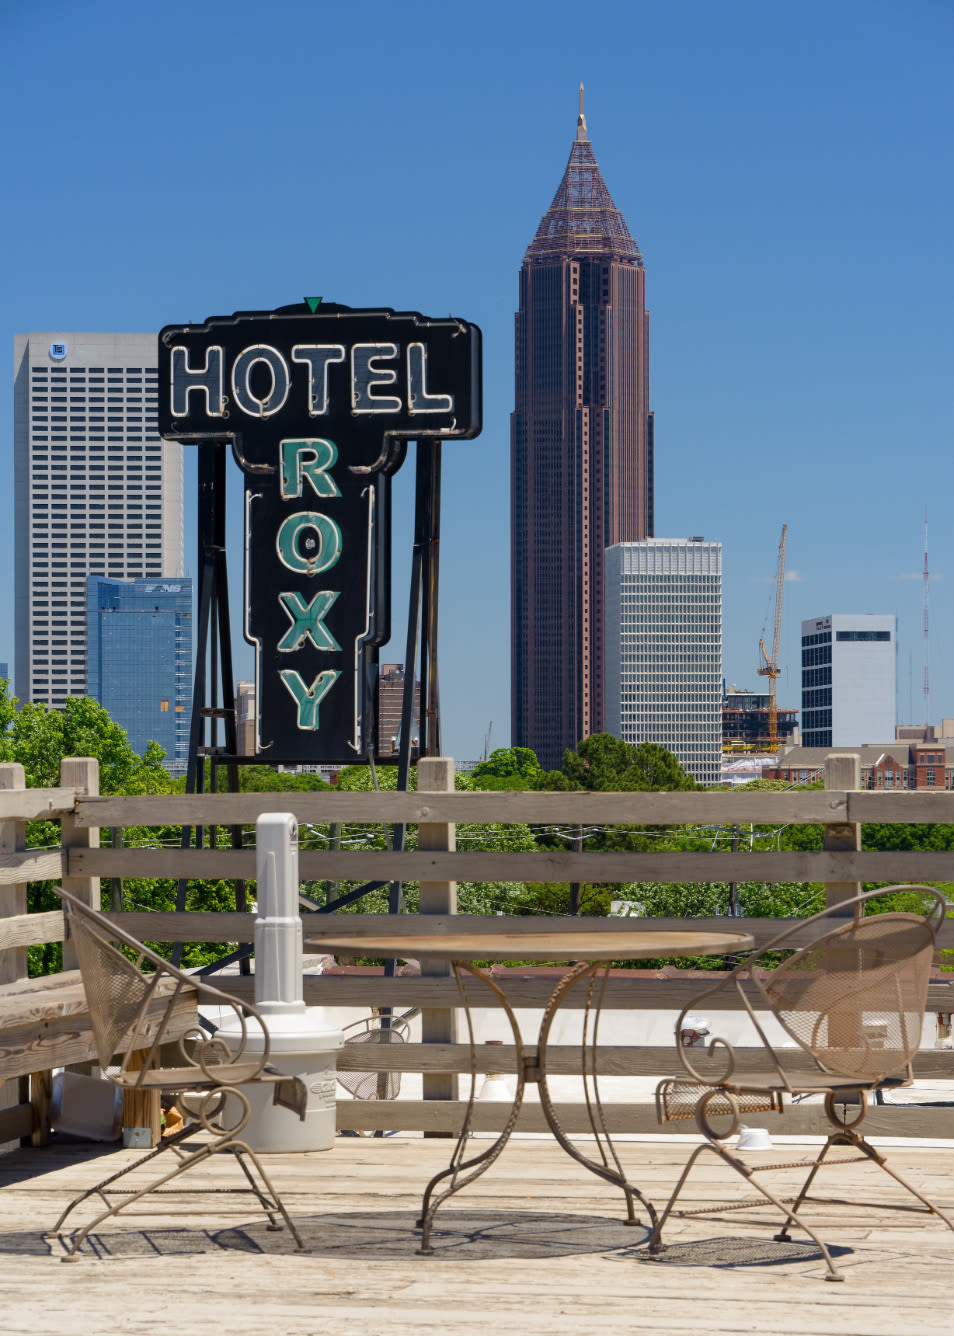 Location Signage and skyline at Hotel Roxy Lofts in Atlanta, Georgia